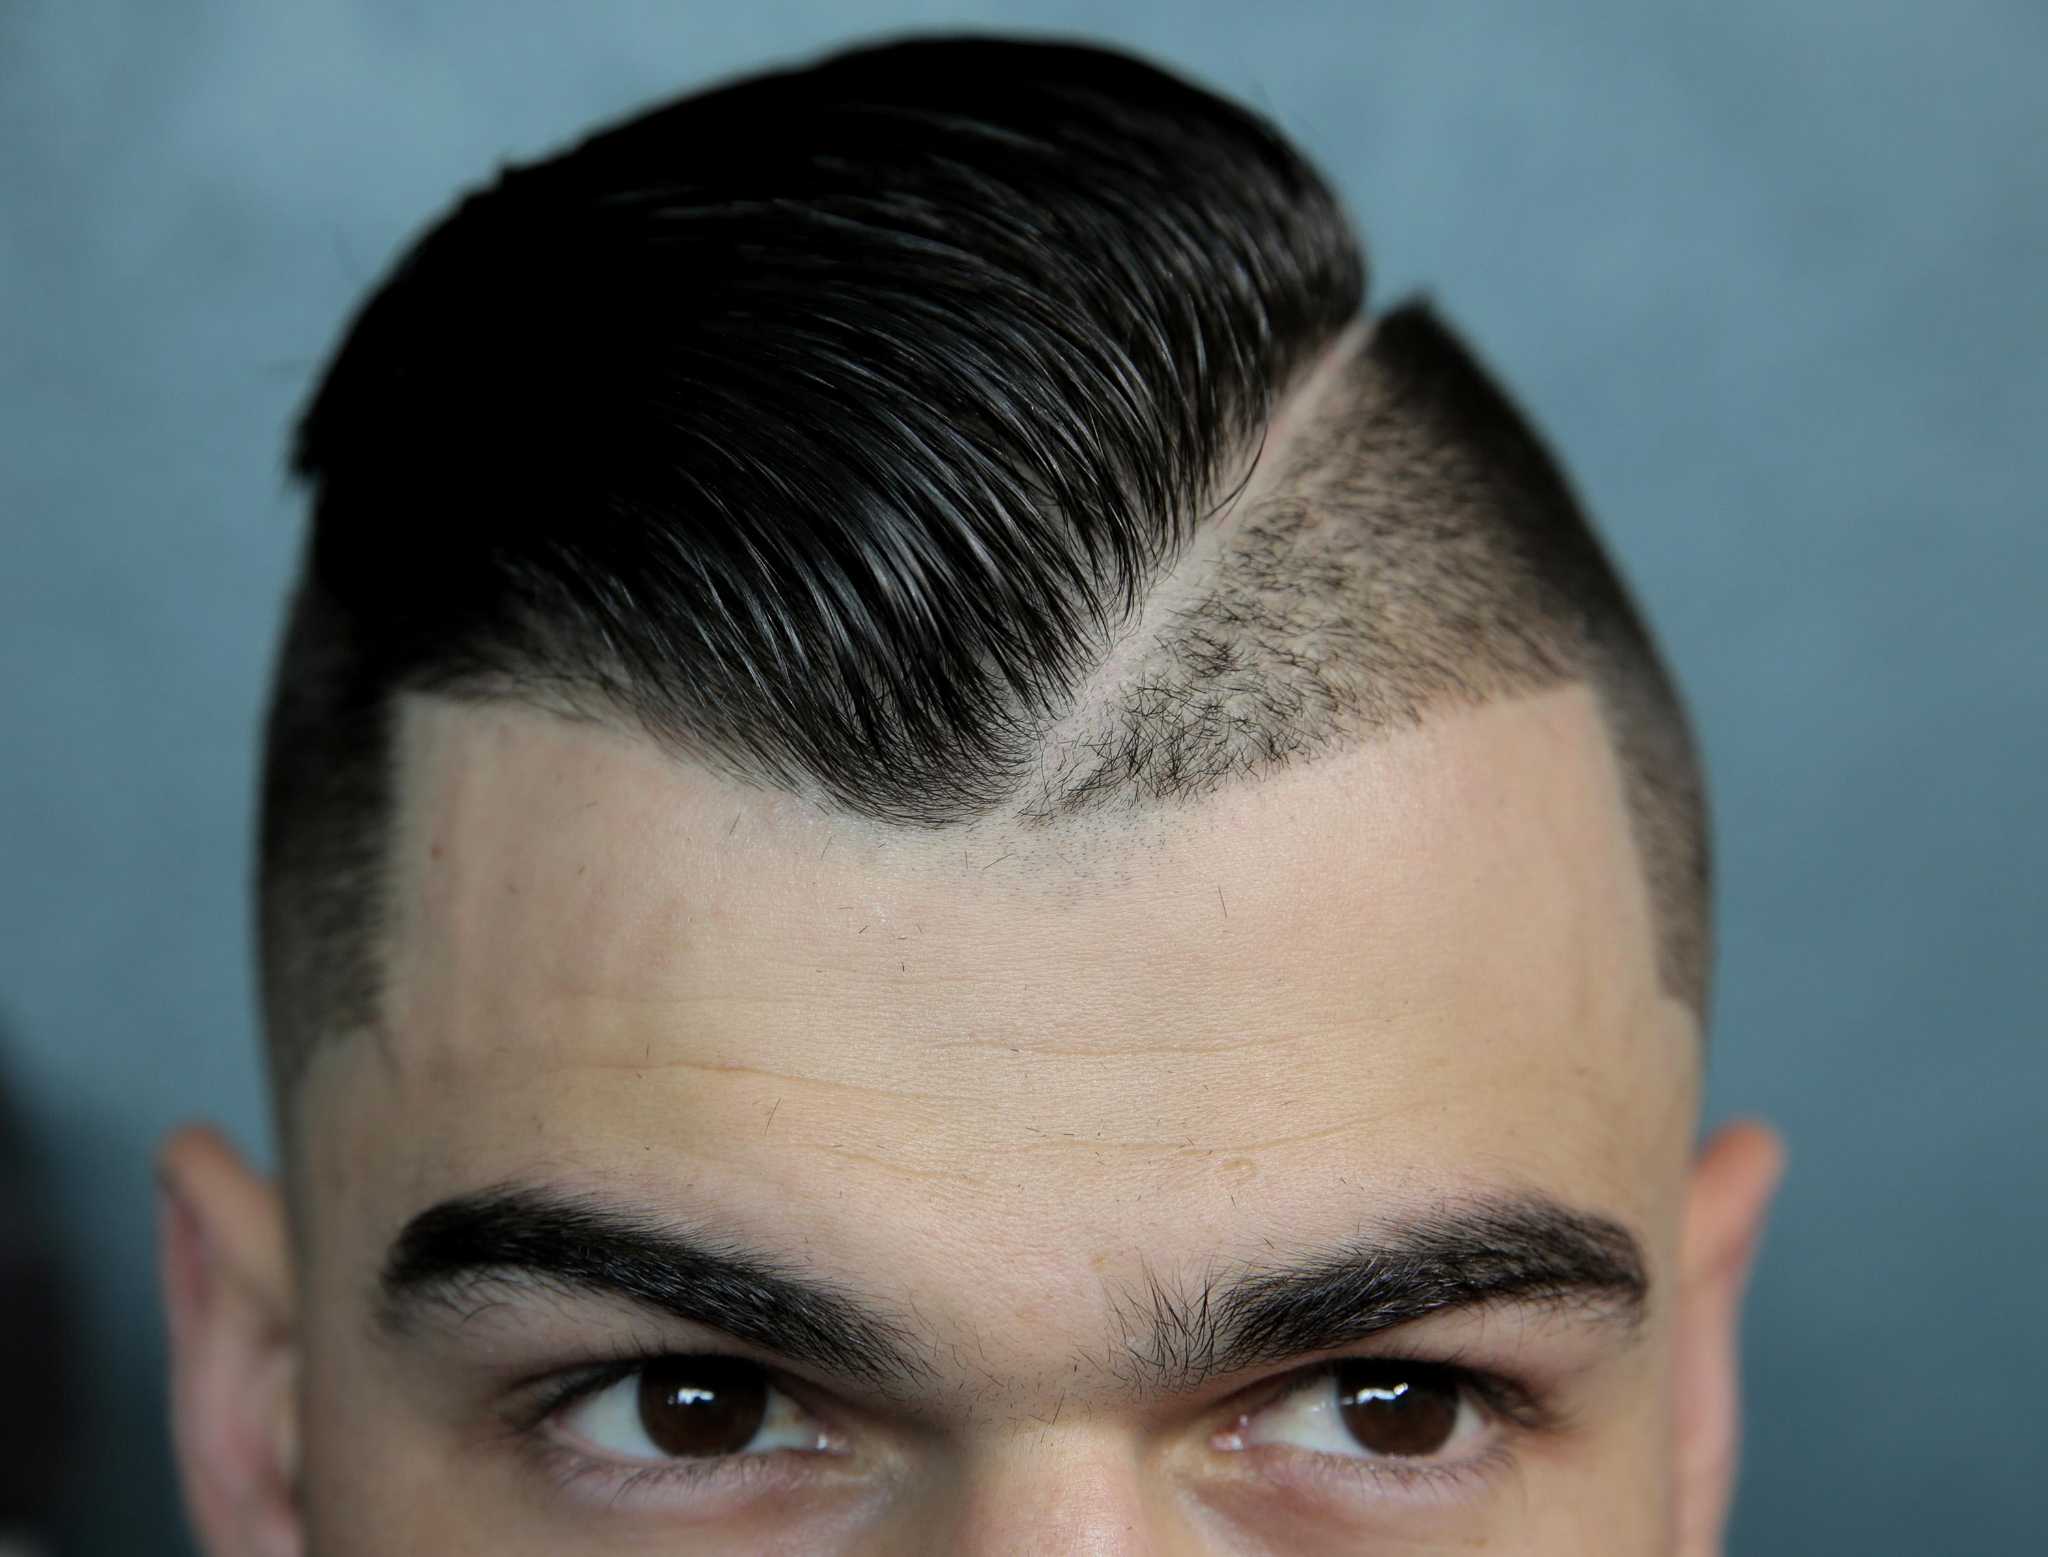 Houston barber makes buzz with Astros logo haircuts - ABC13 Houston